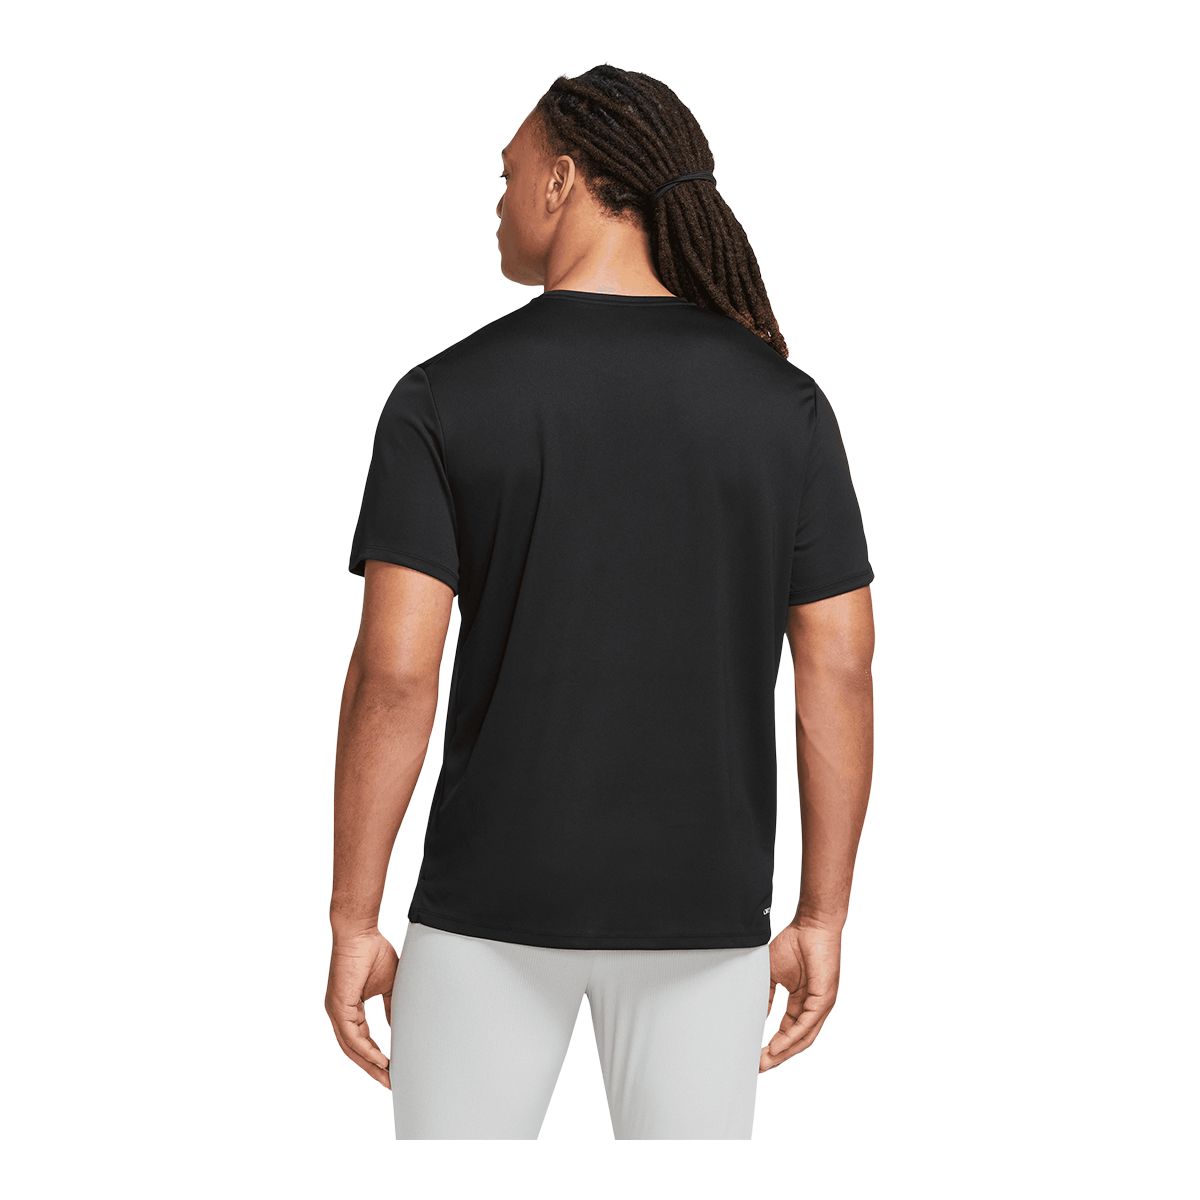 Nike Over Shoulder (MLB Boston Red Sox) Men's T-Shirt.